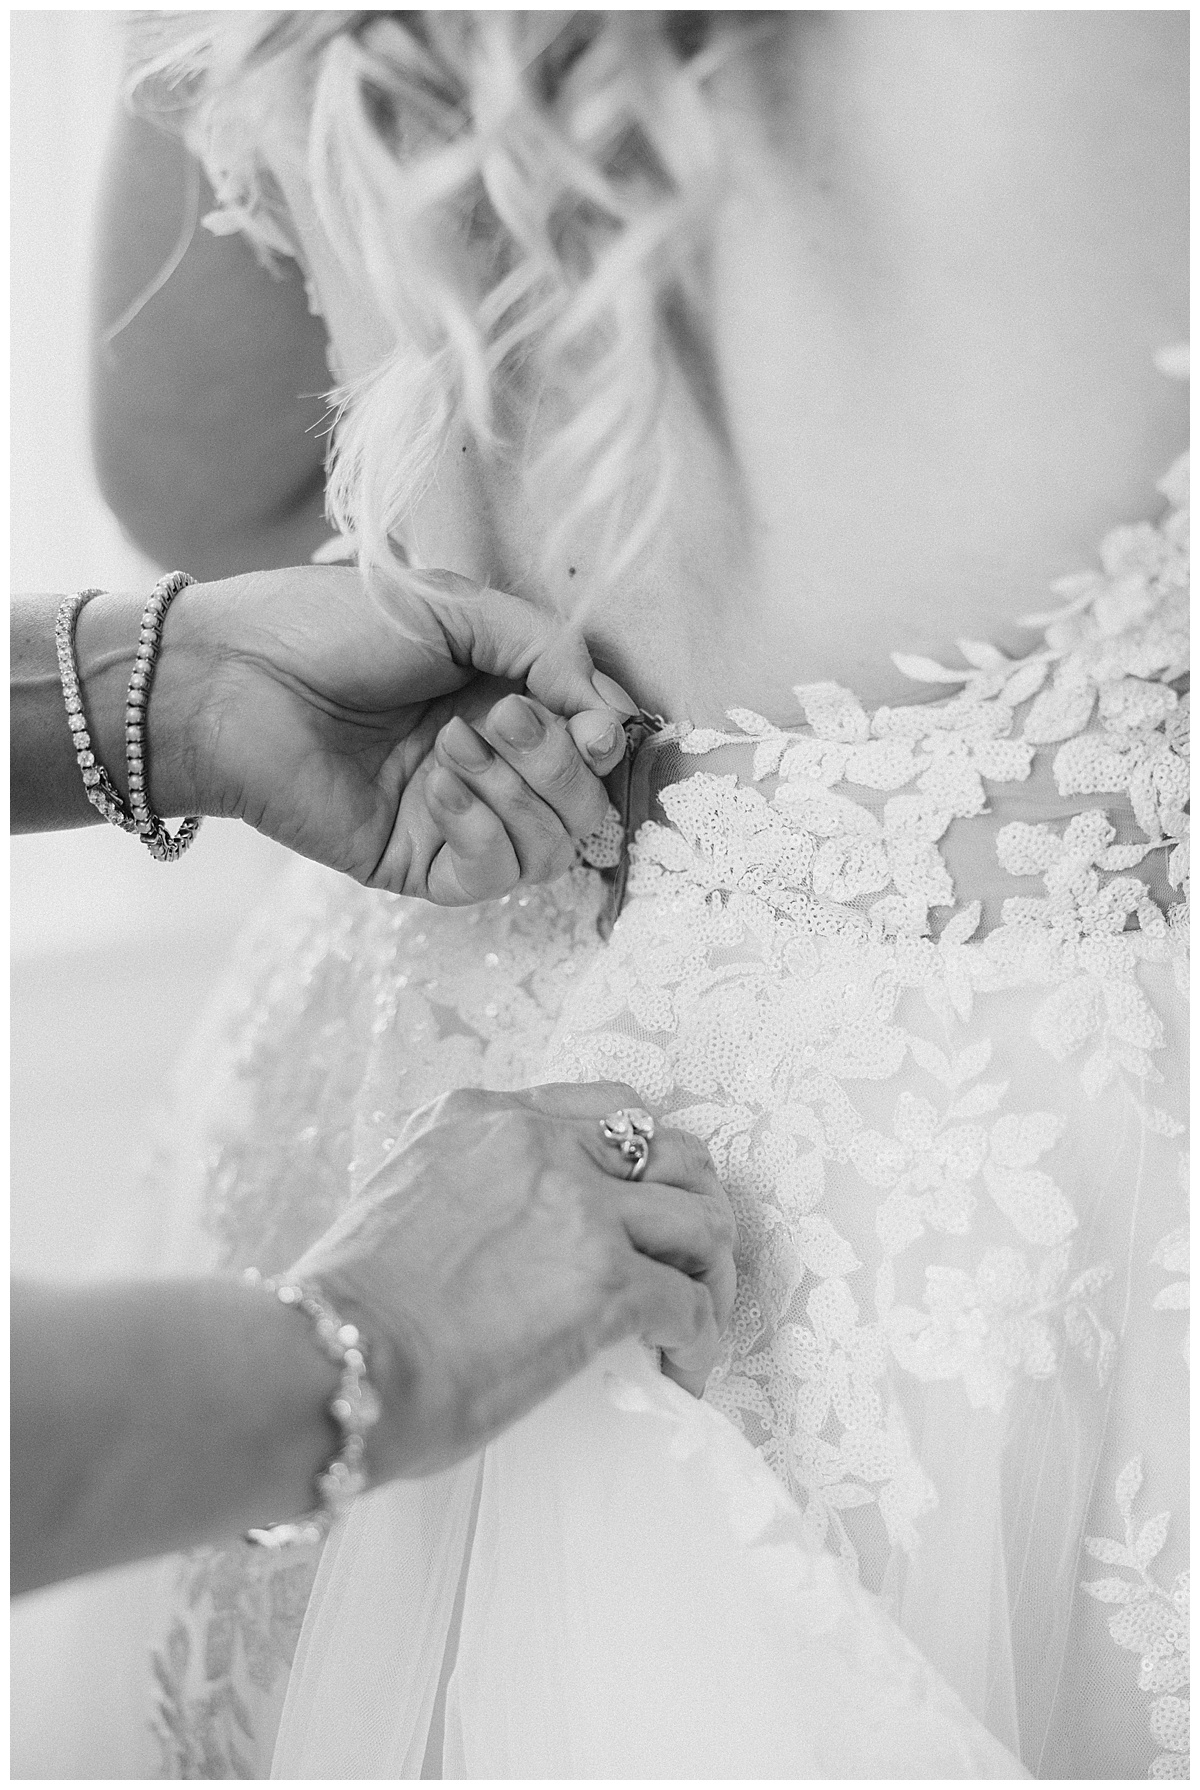 mom zipping daughter in wedding dress